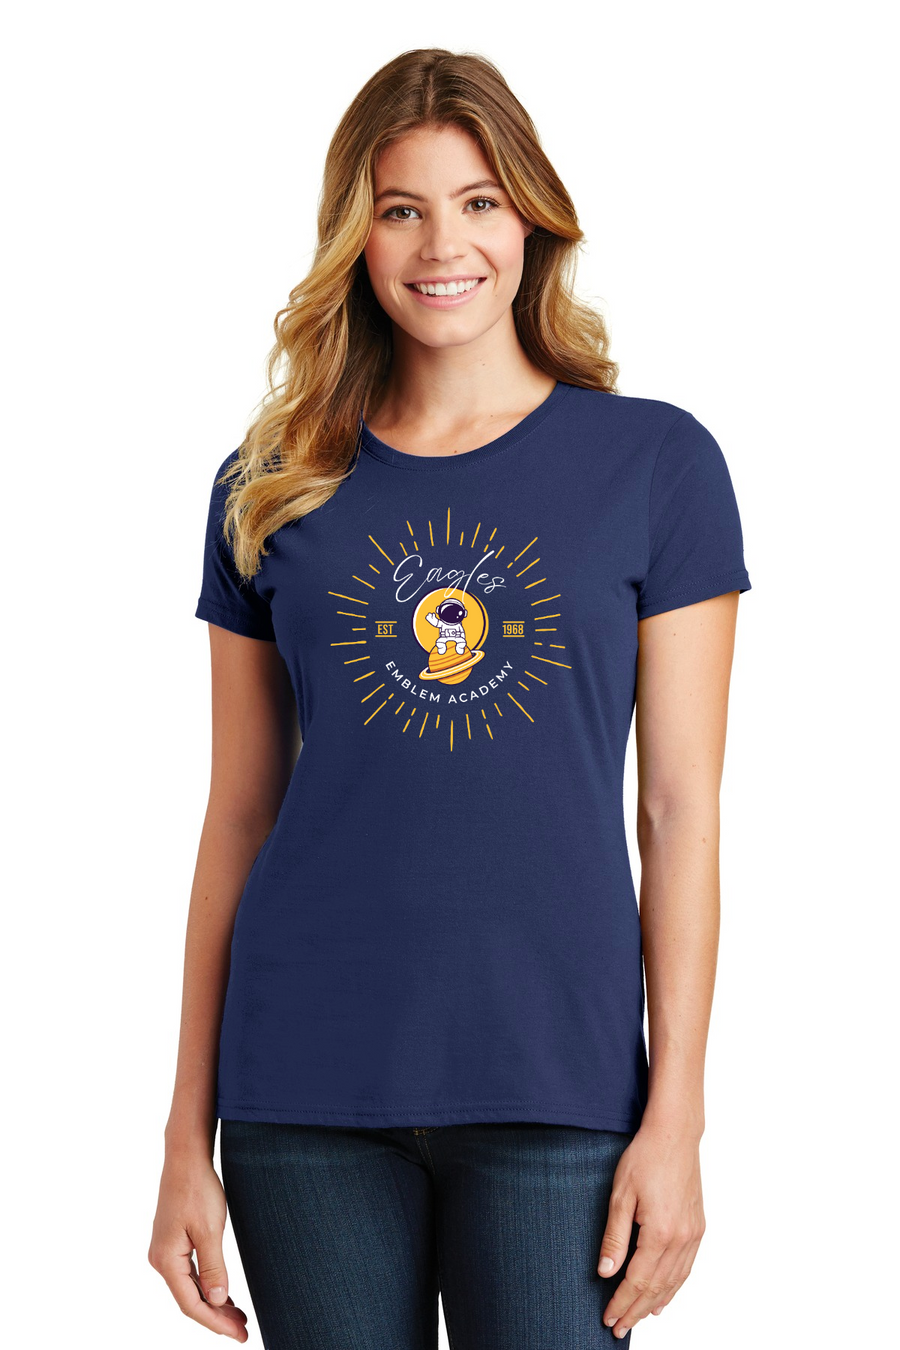 Emblem Academy Spirit Wear 2023/24 On-Demand-Port and Co Ladies Favorite Shirt Astronaut Logo